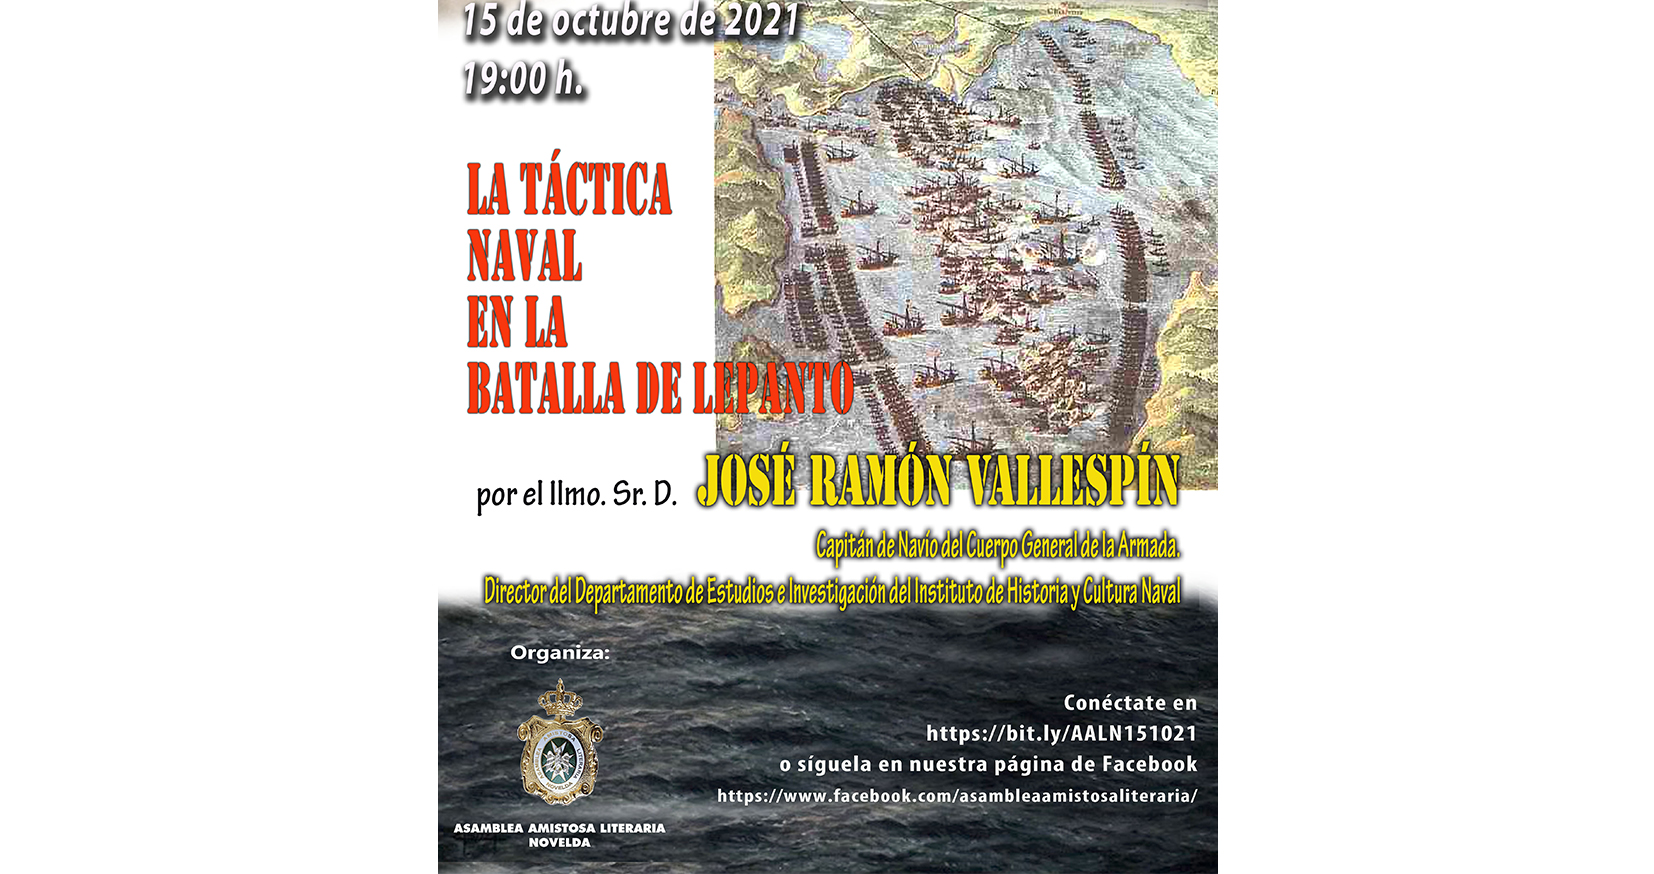 La Asamblea Amistosa Literaria de Novelda presenta mañana la videoconferencia La táctica naval en la Batalla de Lepanto